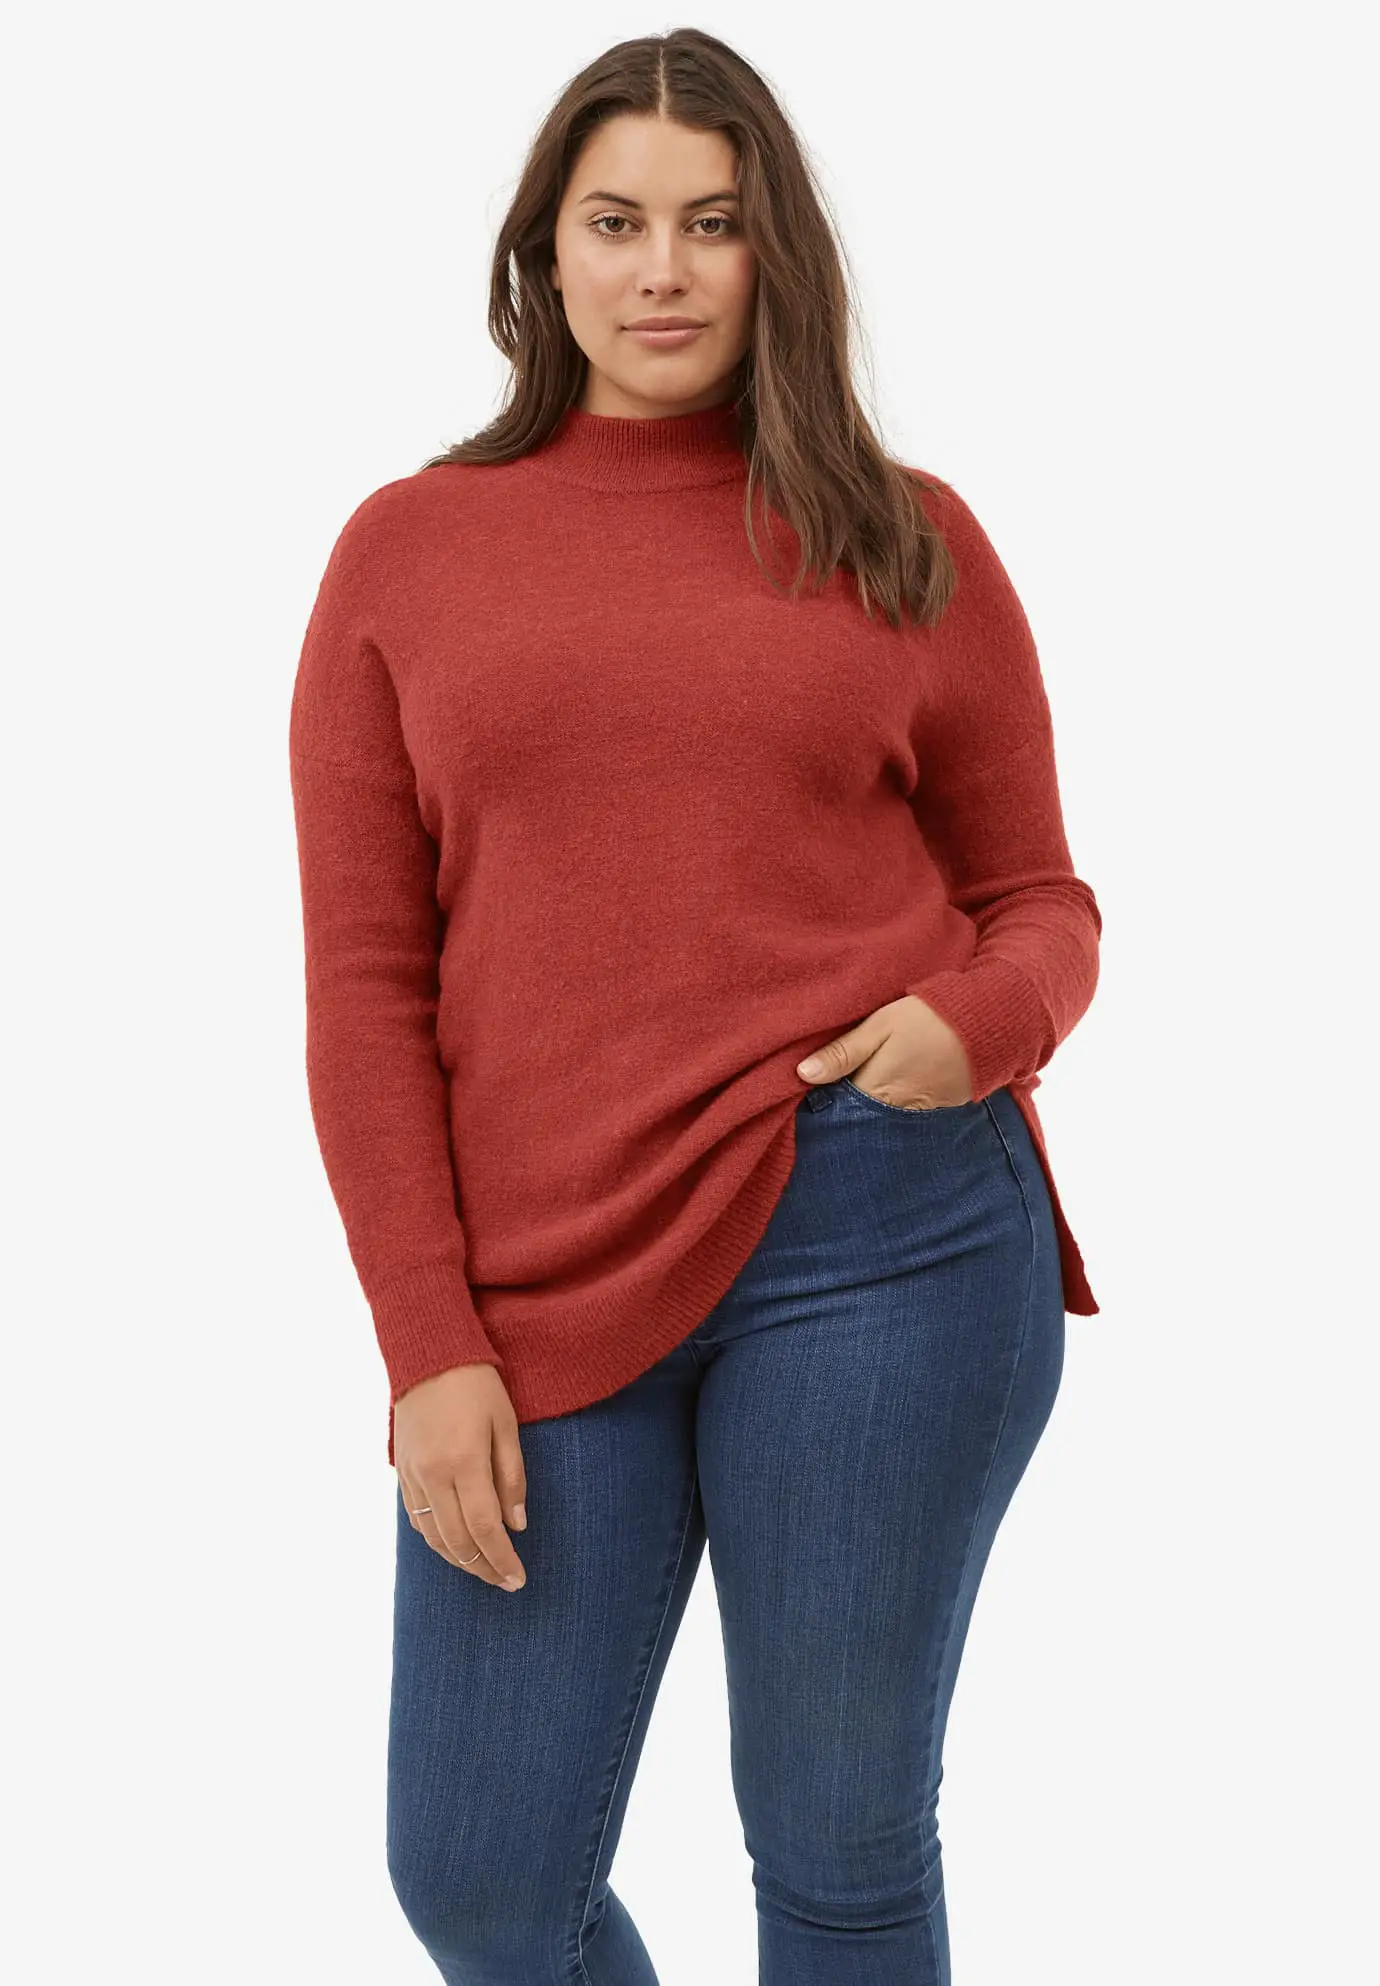 Plus Size Nylon Sweater 12